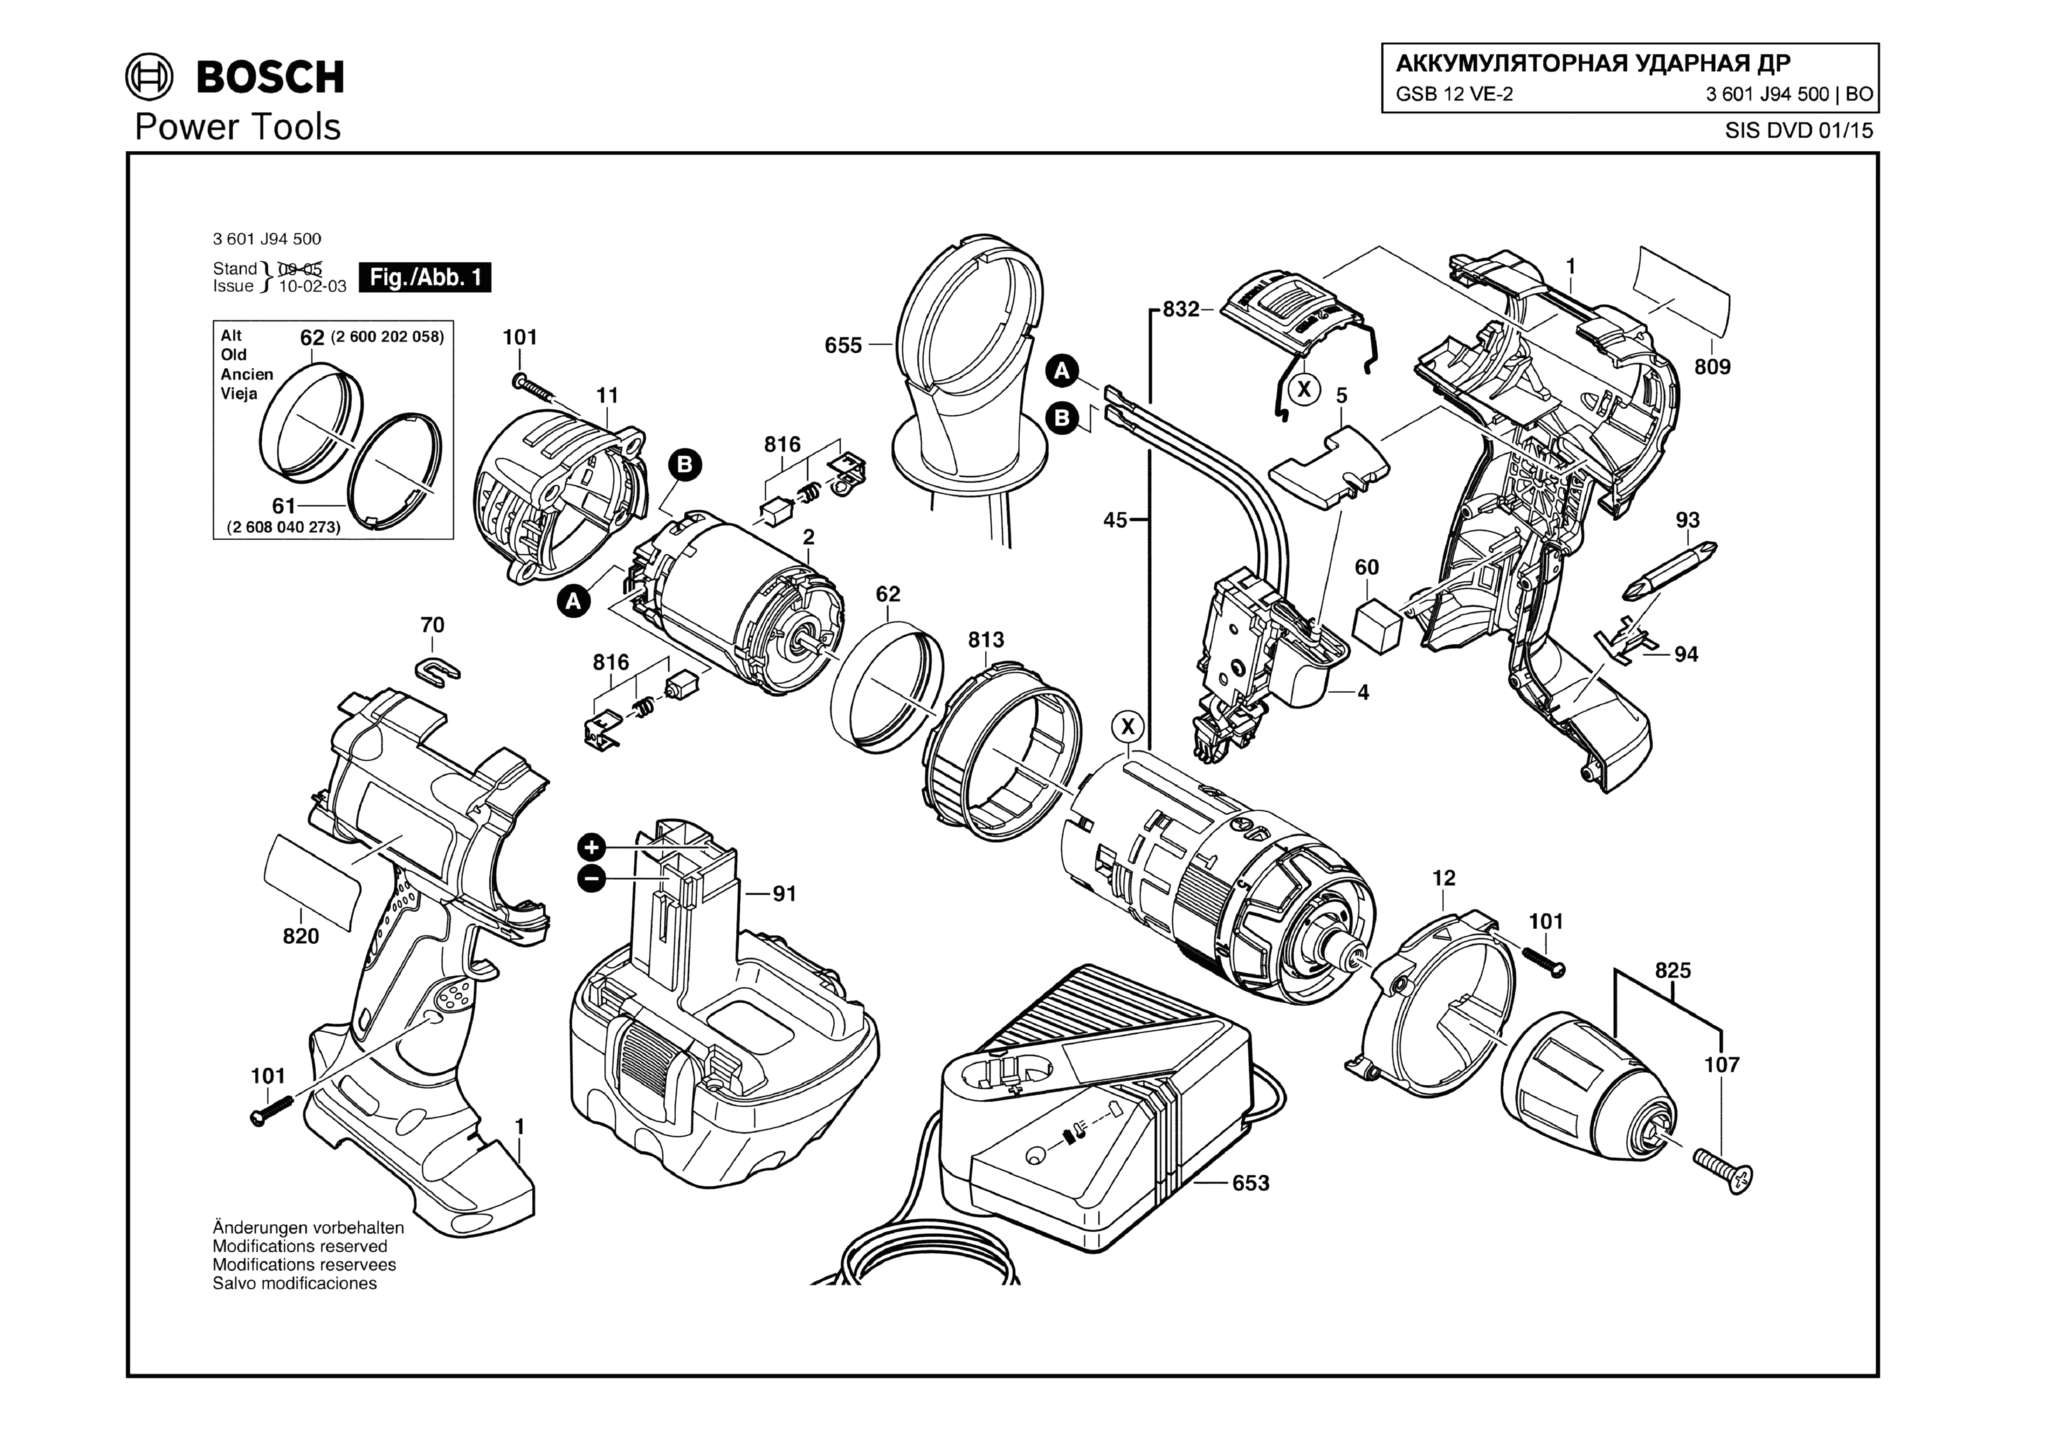 Запчасти, схема и деталировка Bosch GSB 12 VE-2 (ТИП 3601J94500)